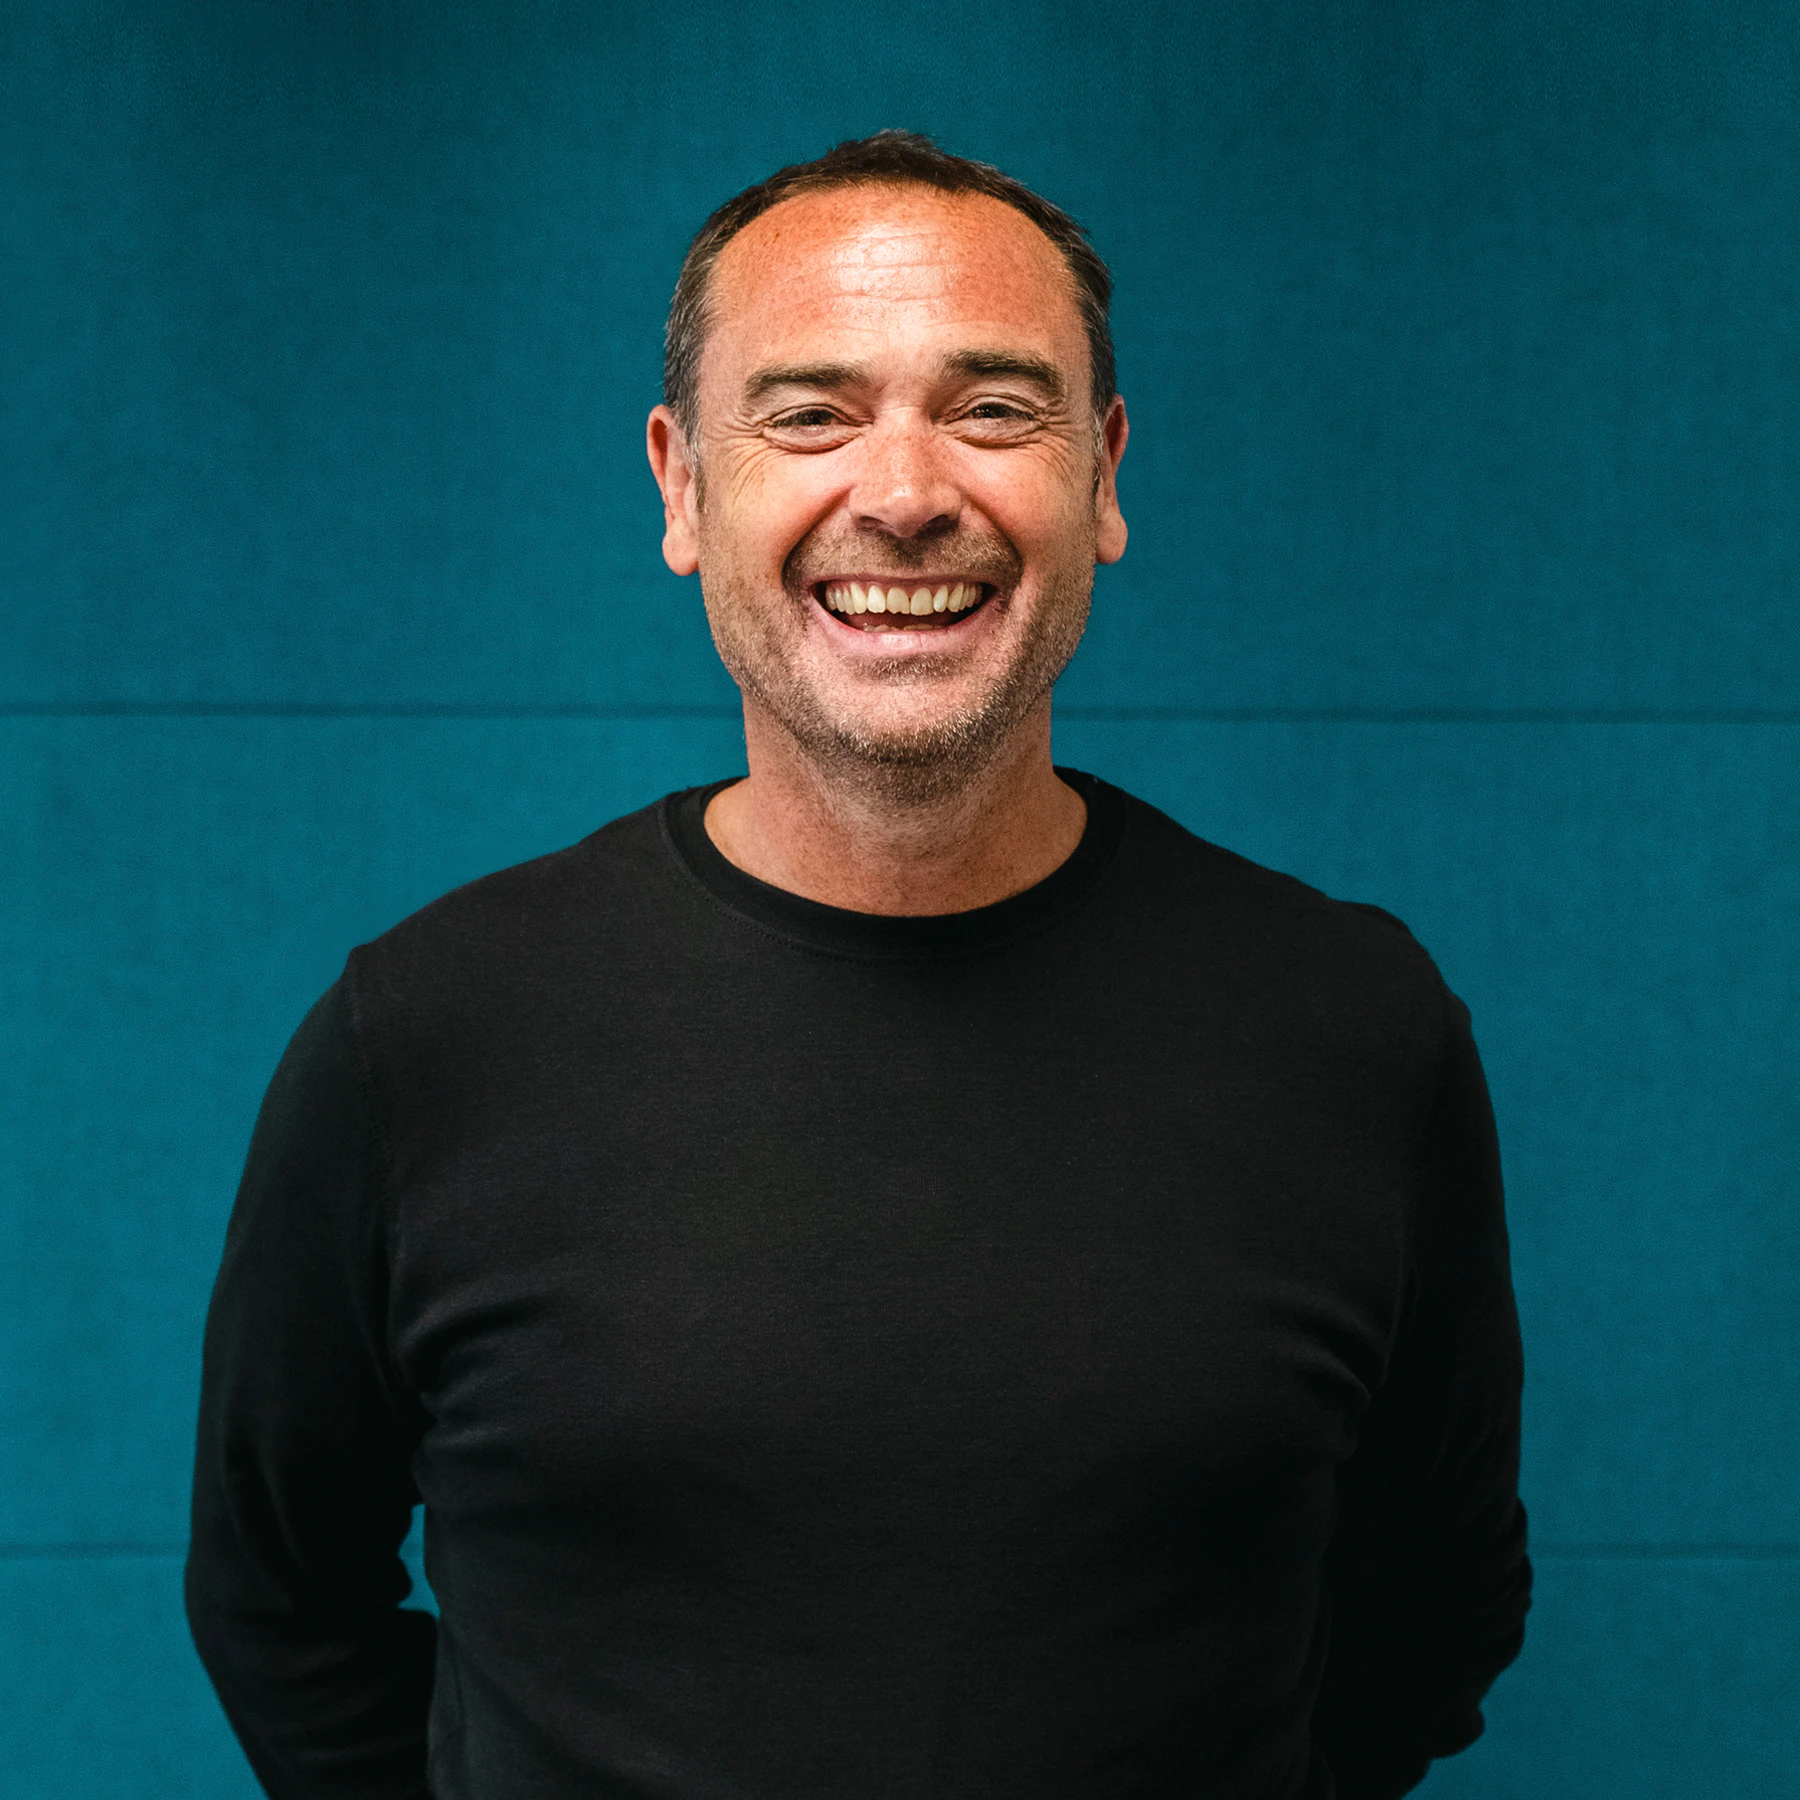 A smiling headshot of Steve Evans on a blue background